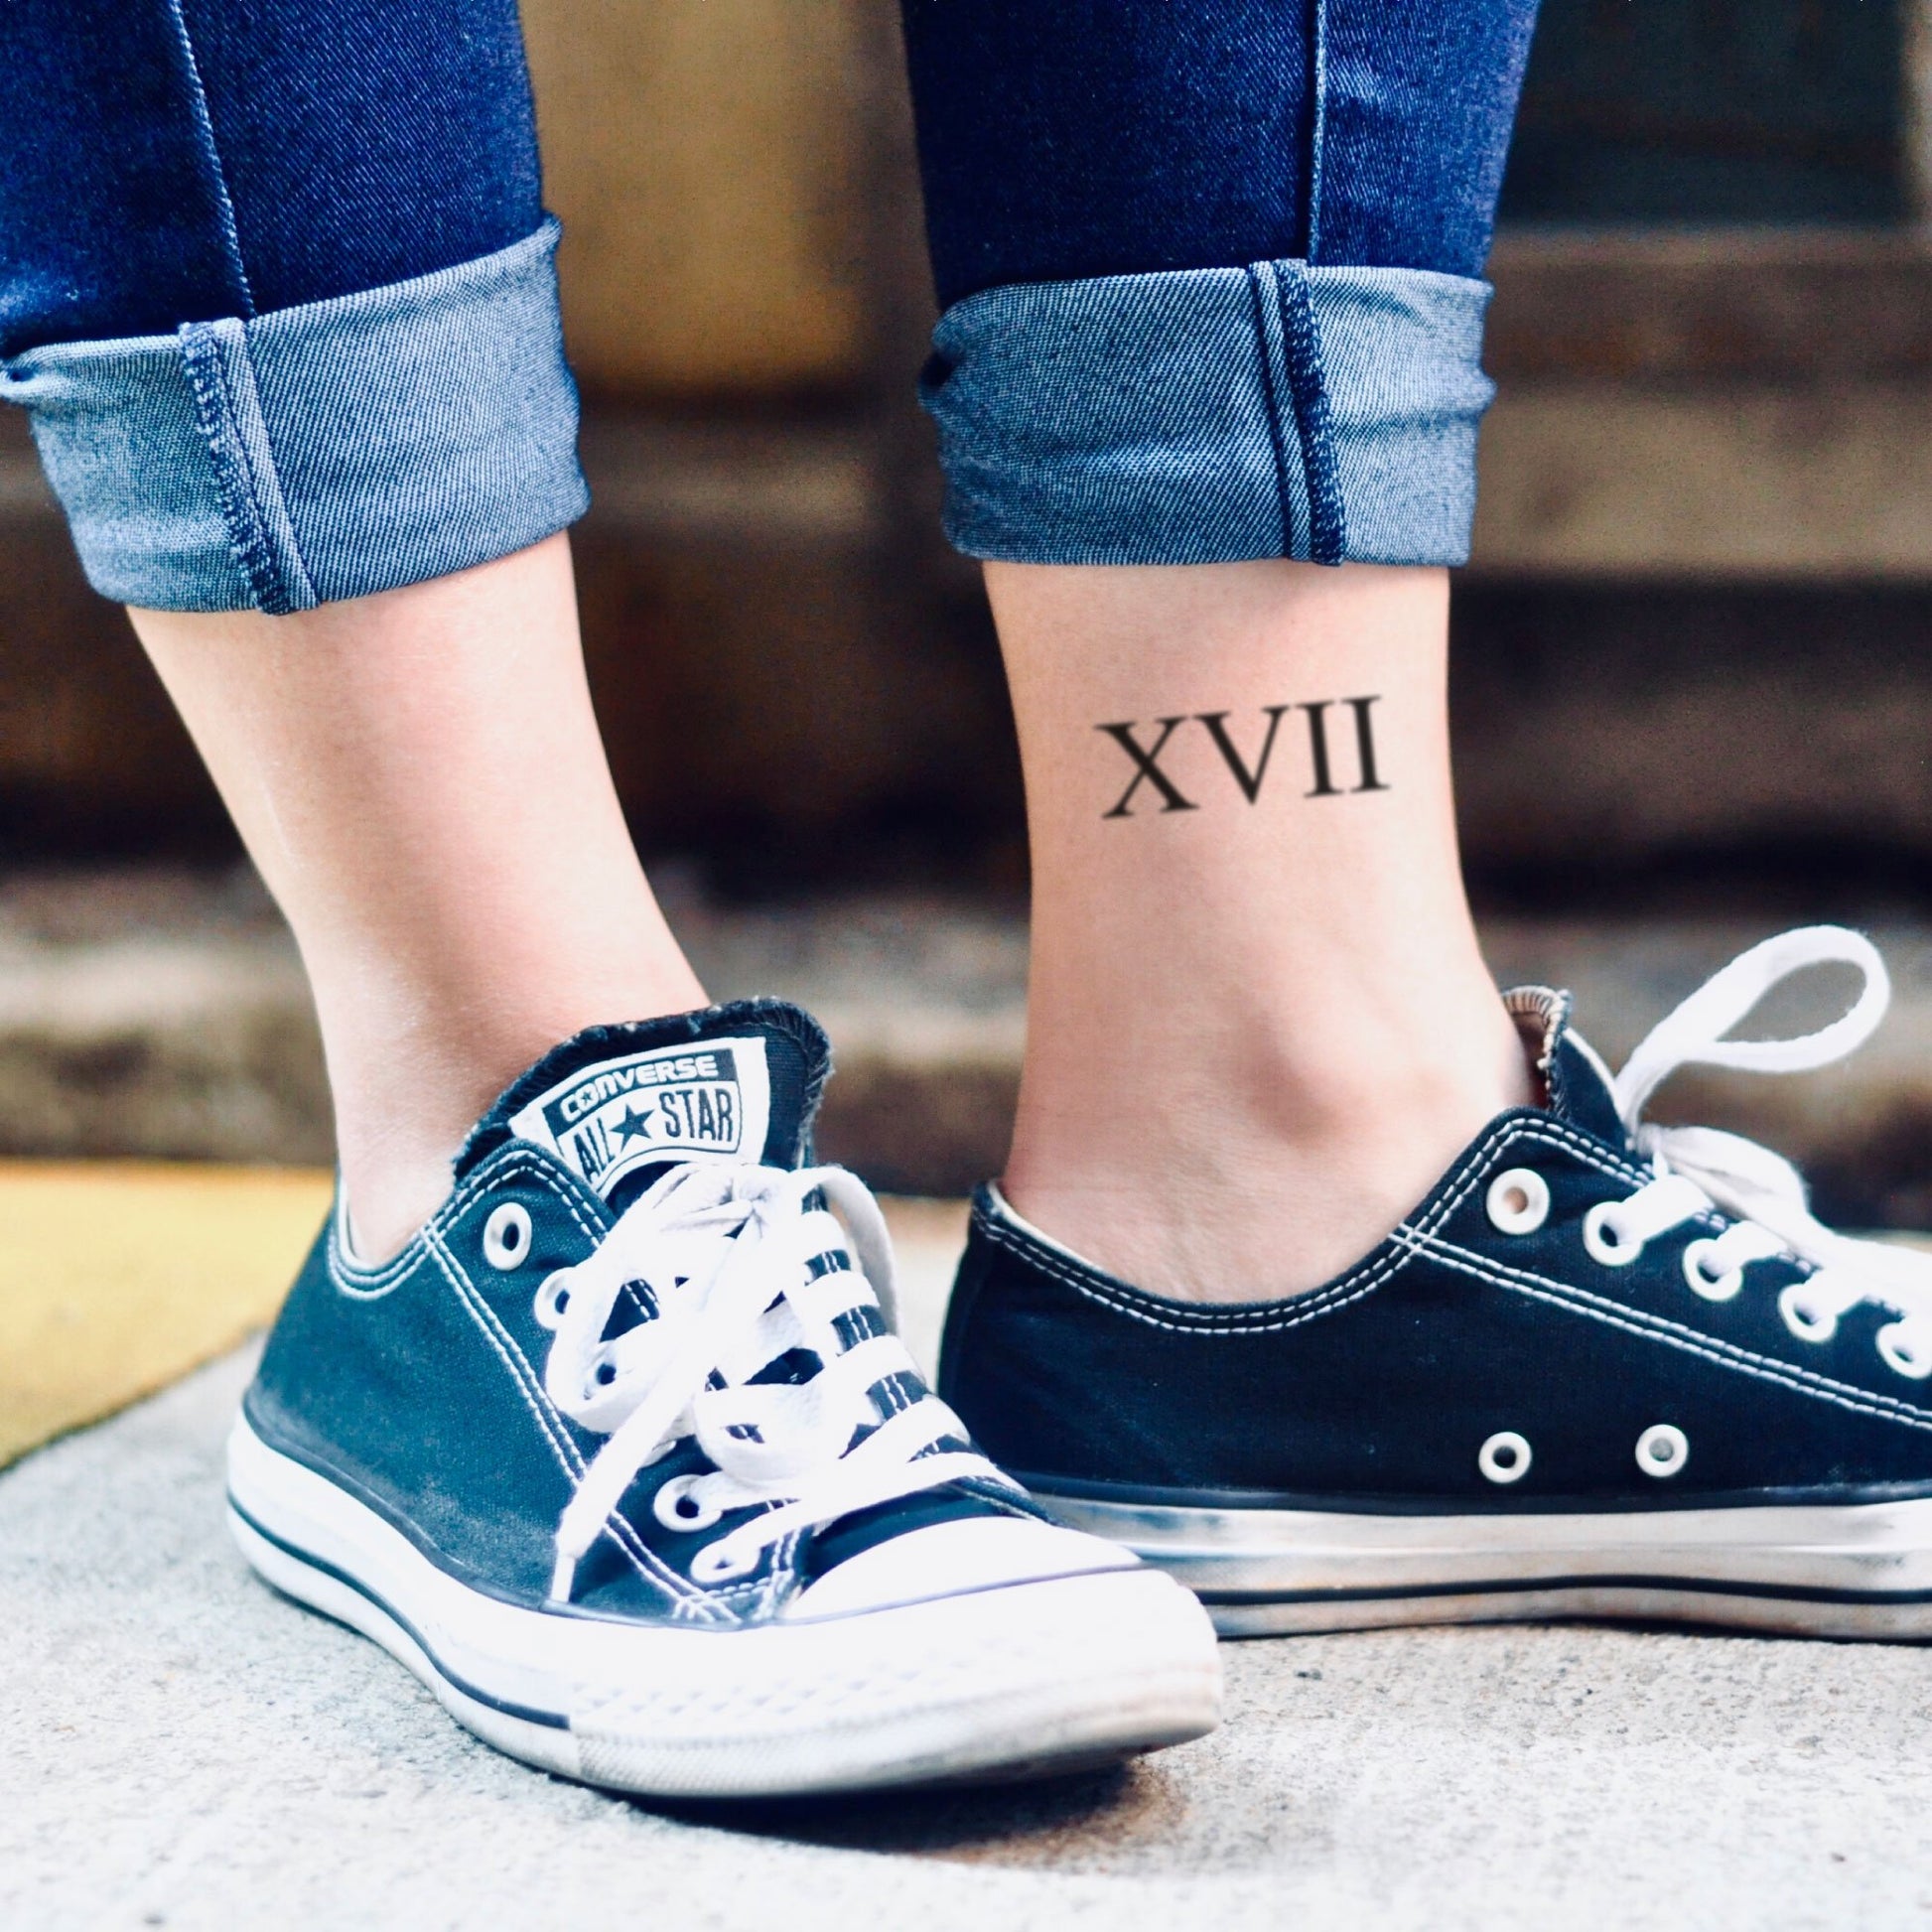 fake small xvii roman numeral 17 seventeen lettering temporary tattoo sticker design idea on ankle